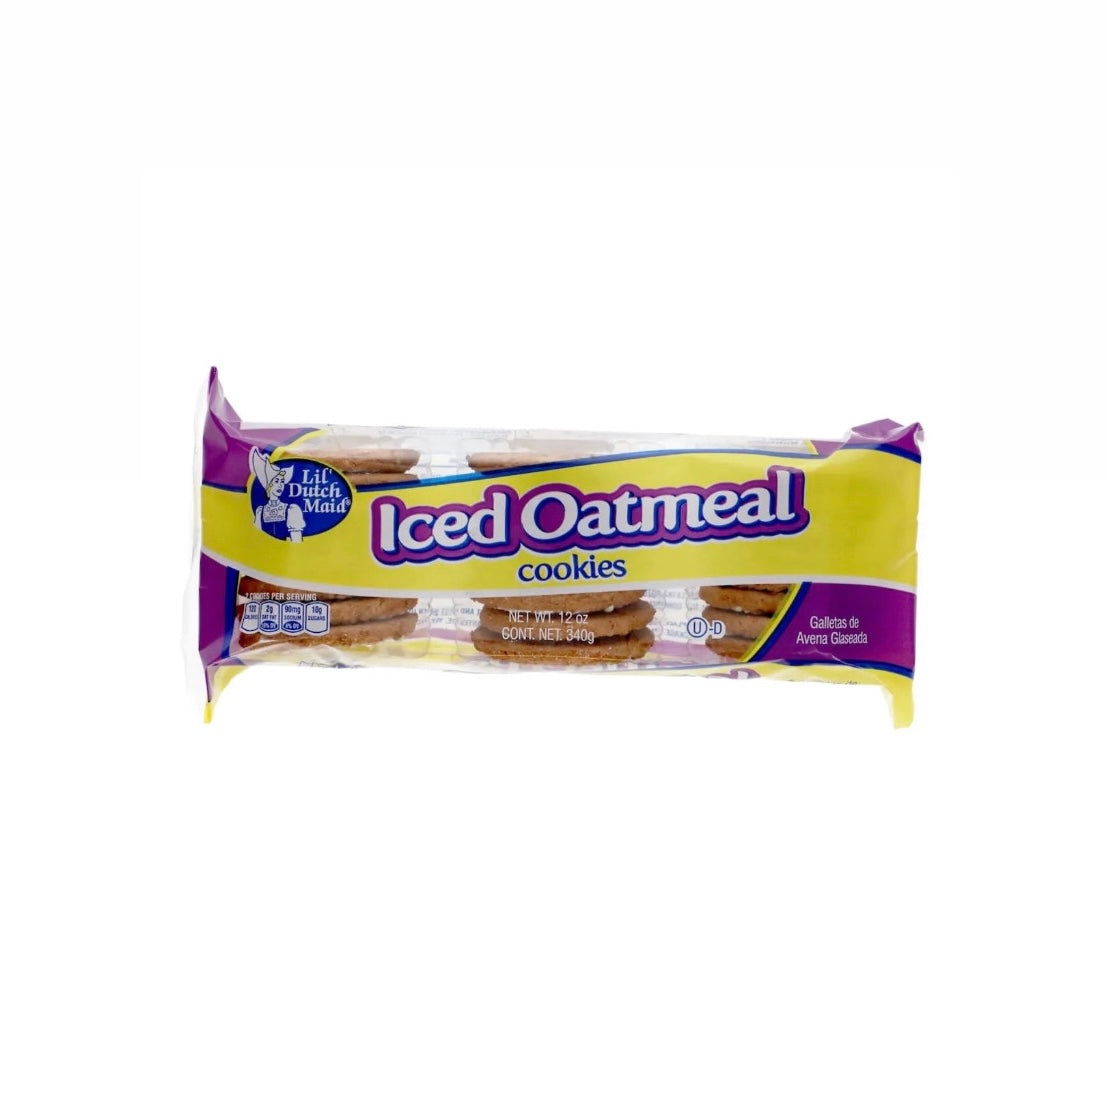 Lil' Dutch Maid Iced Oatmeal Cookies (171400)